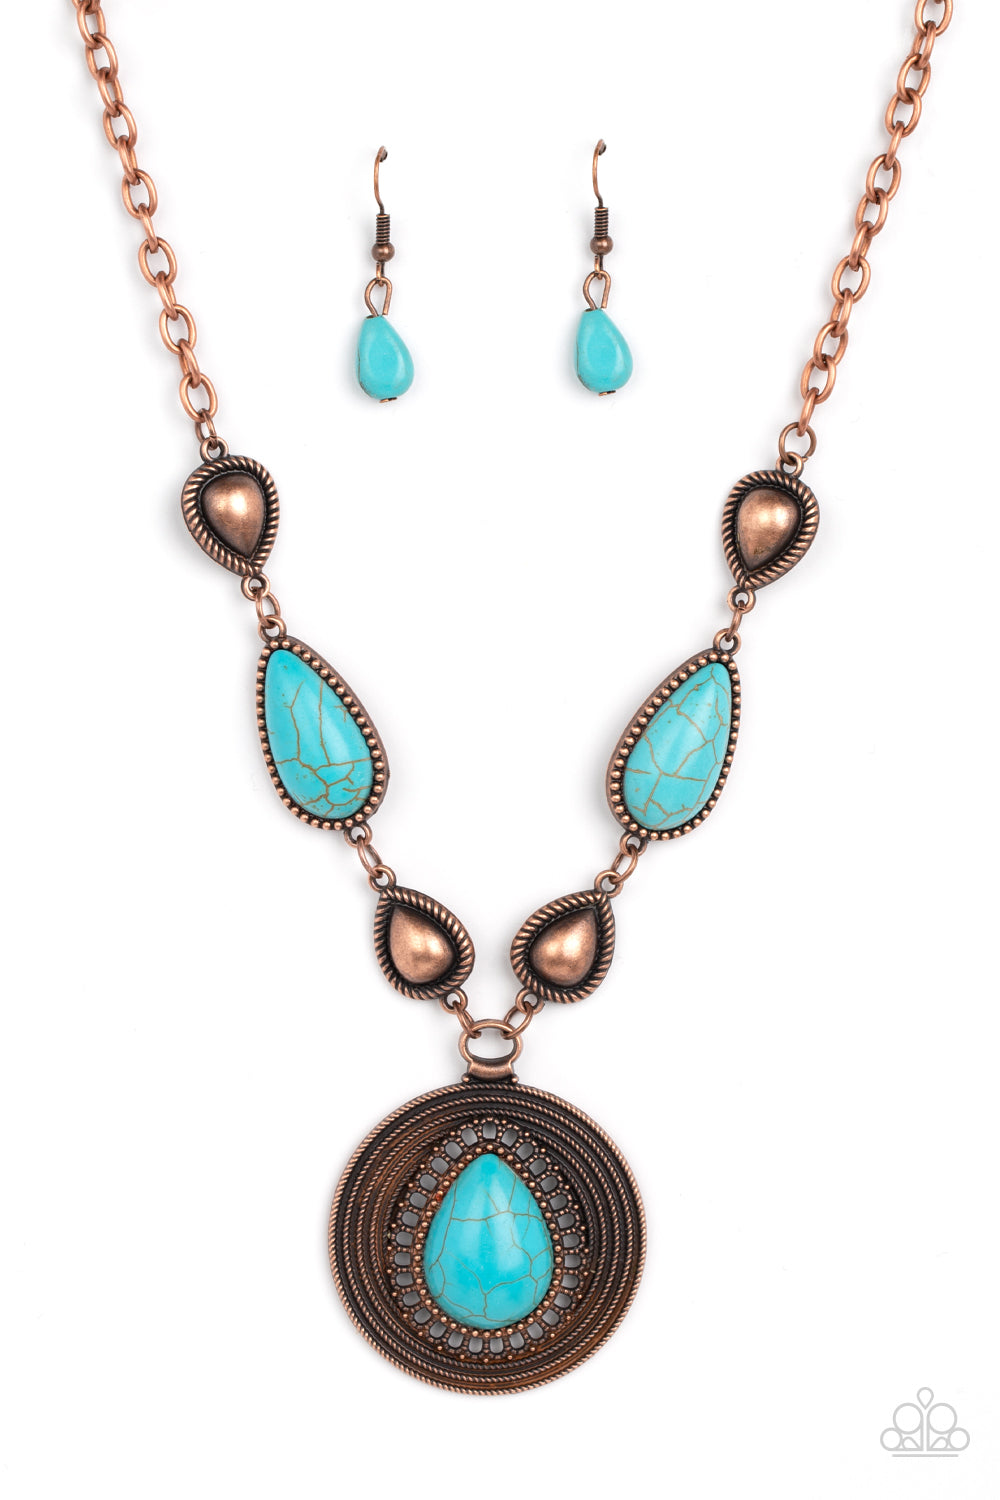 Saguaro Soul Trek - Copper Teardrops, Copper Accents, & Oversized Turquoise Teardrop Paparazzi Necklace & matching earrings